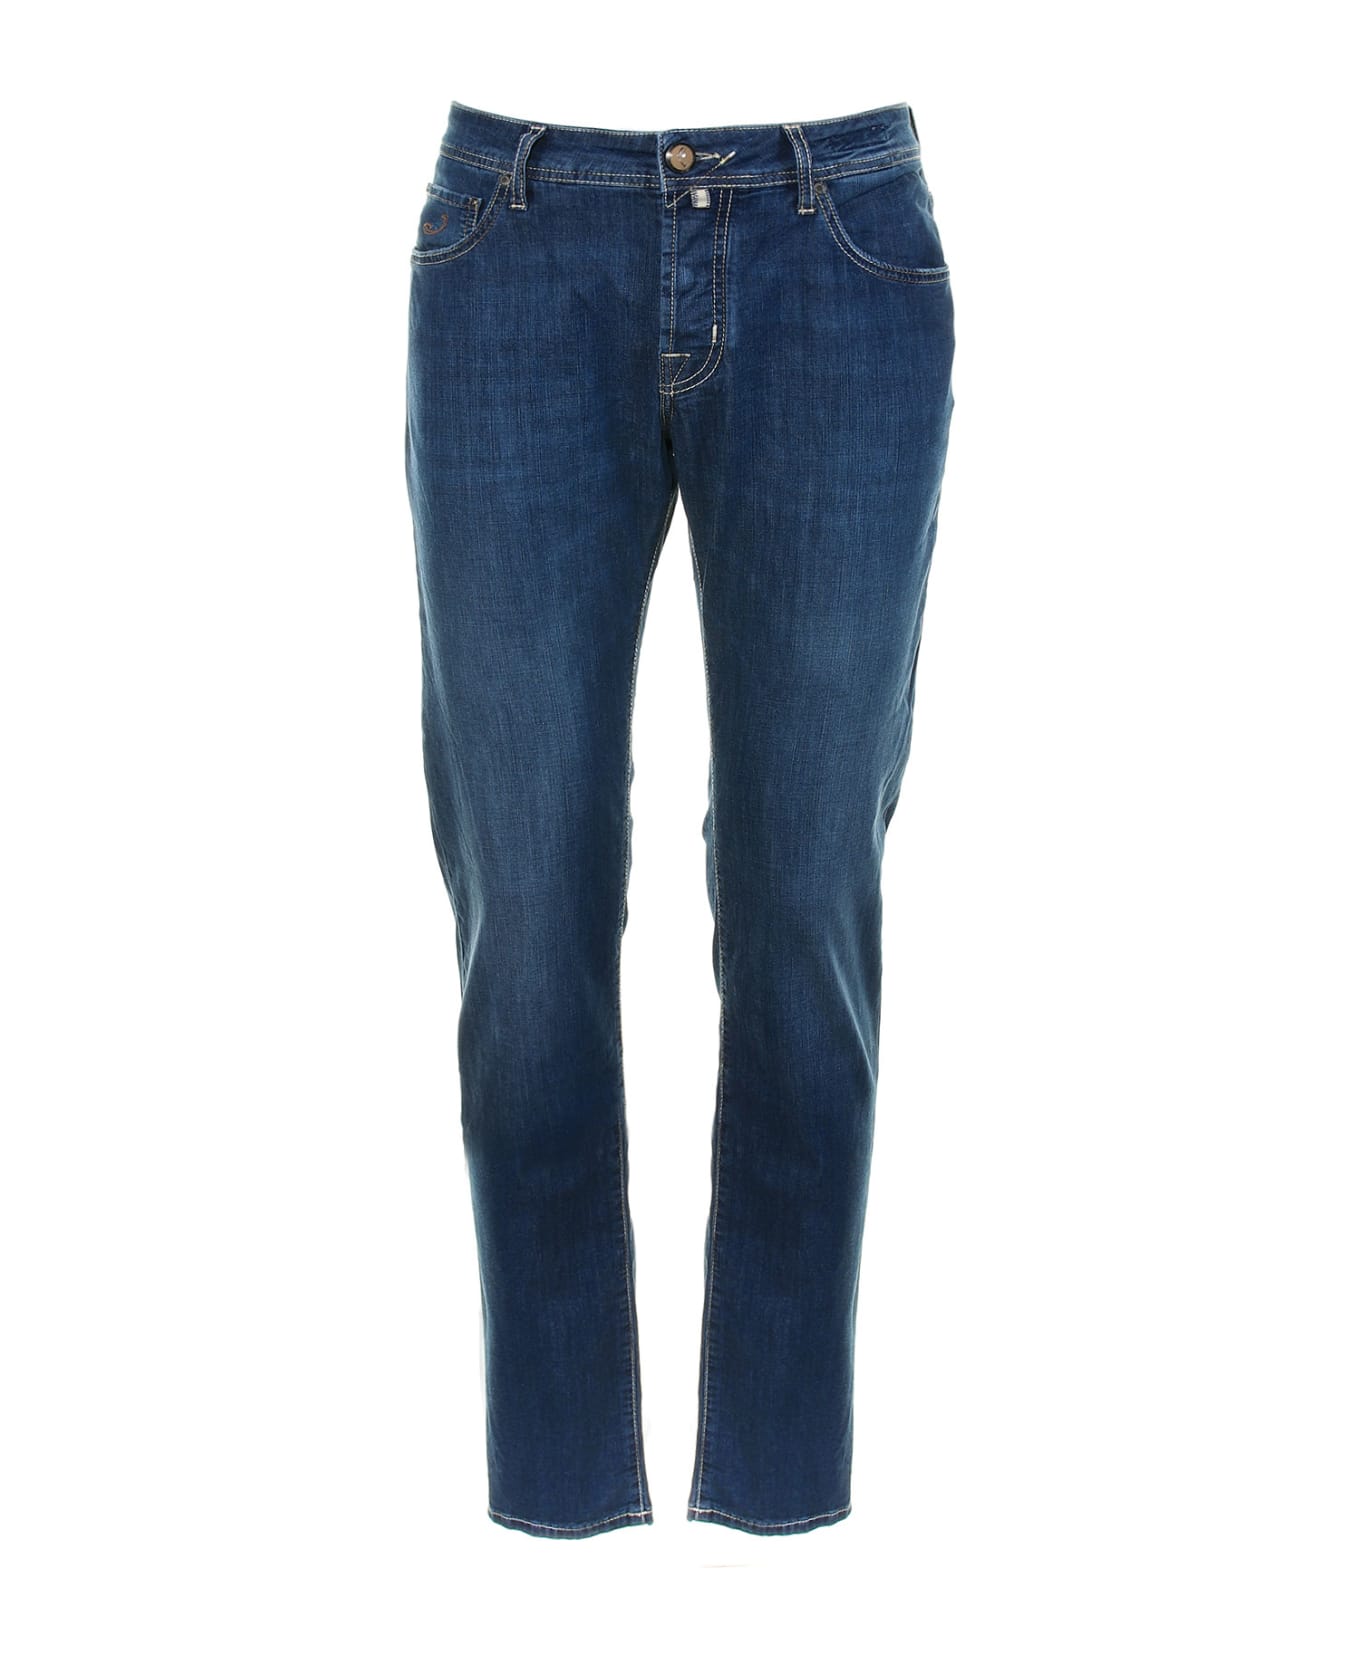 Jacob Cohen 5-pocket Denim Jeans - Blu デニム